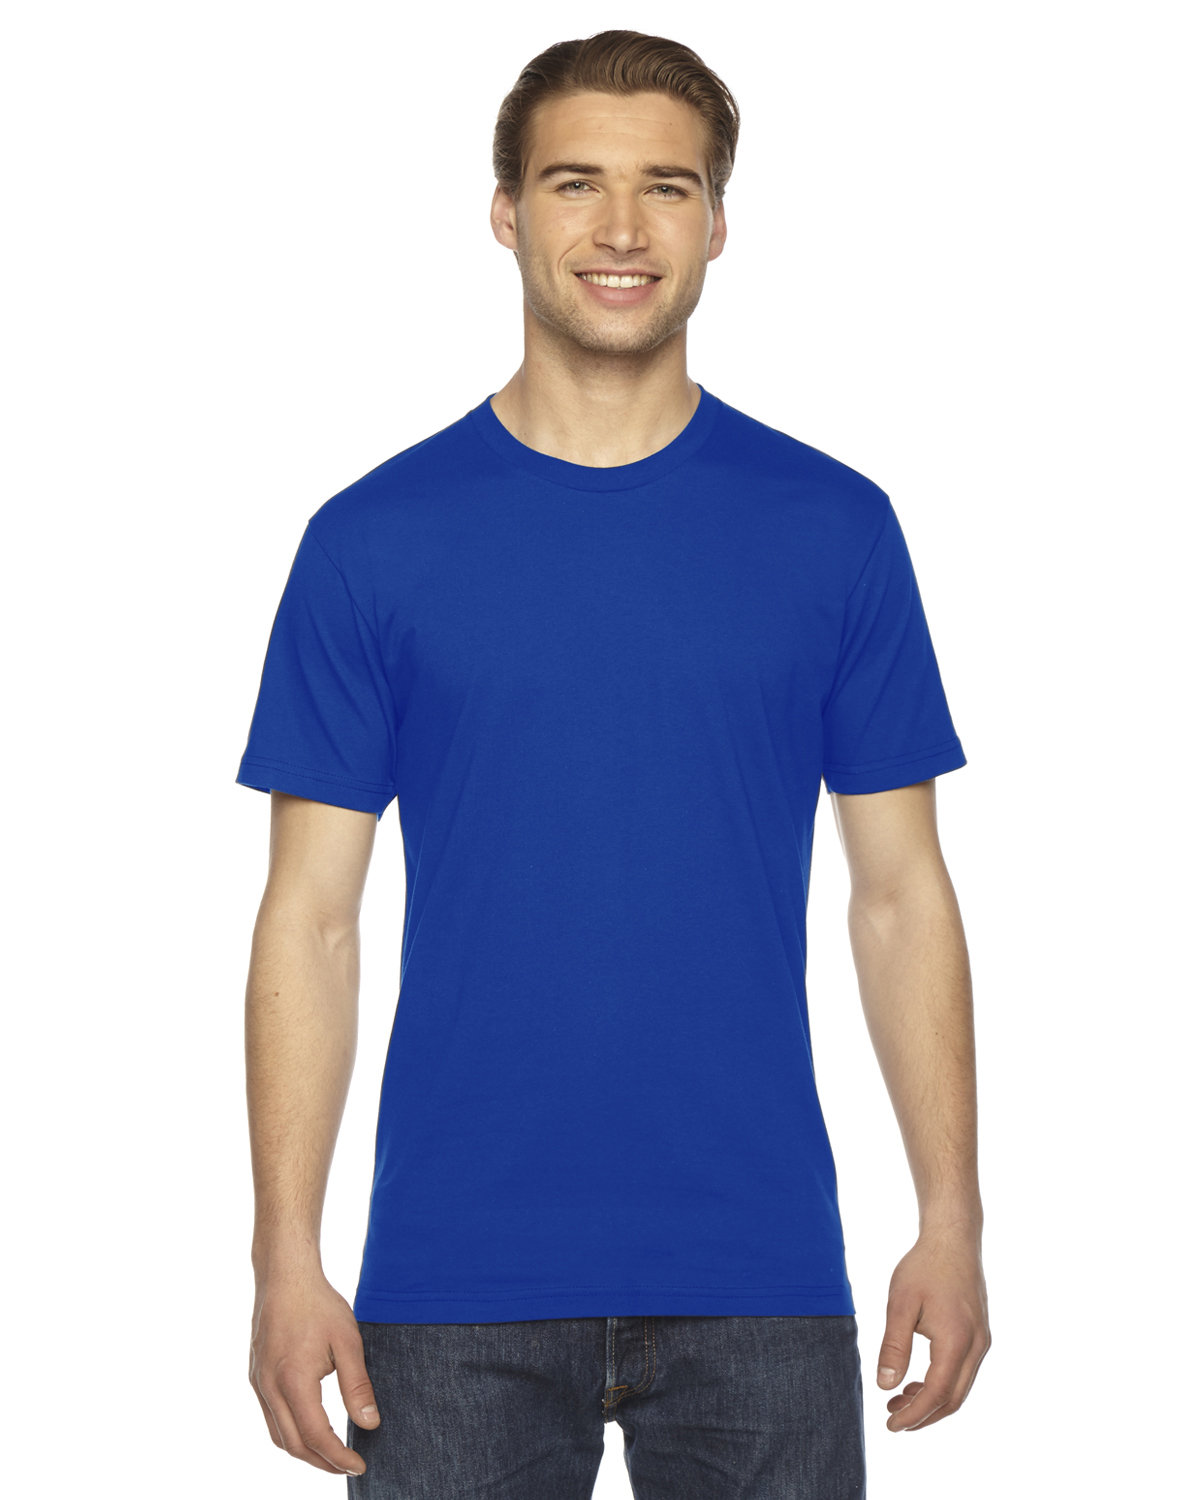 American Apparel Unisex Fine Jersey Short-Sleeve T-Shirt ROYAL BLUE 